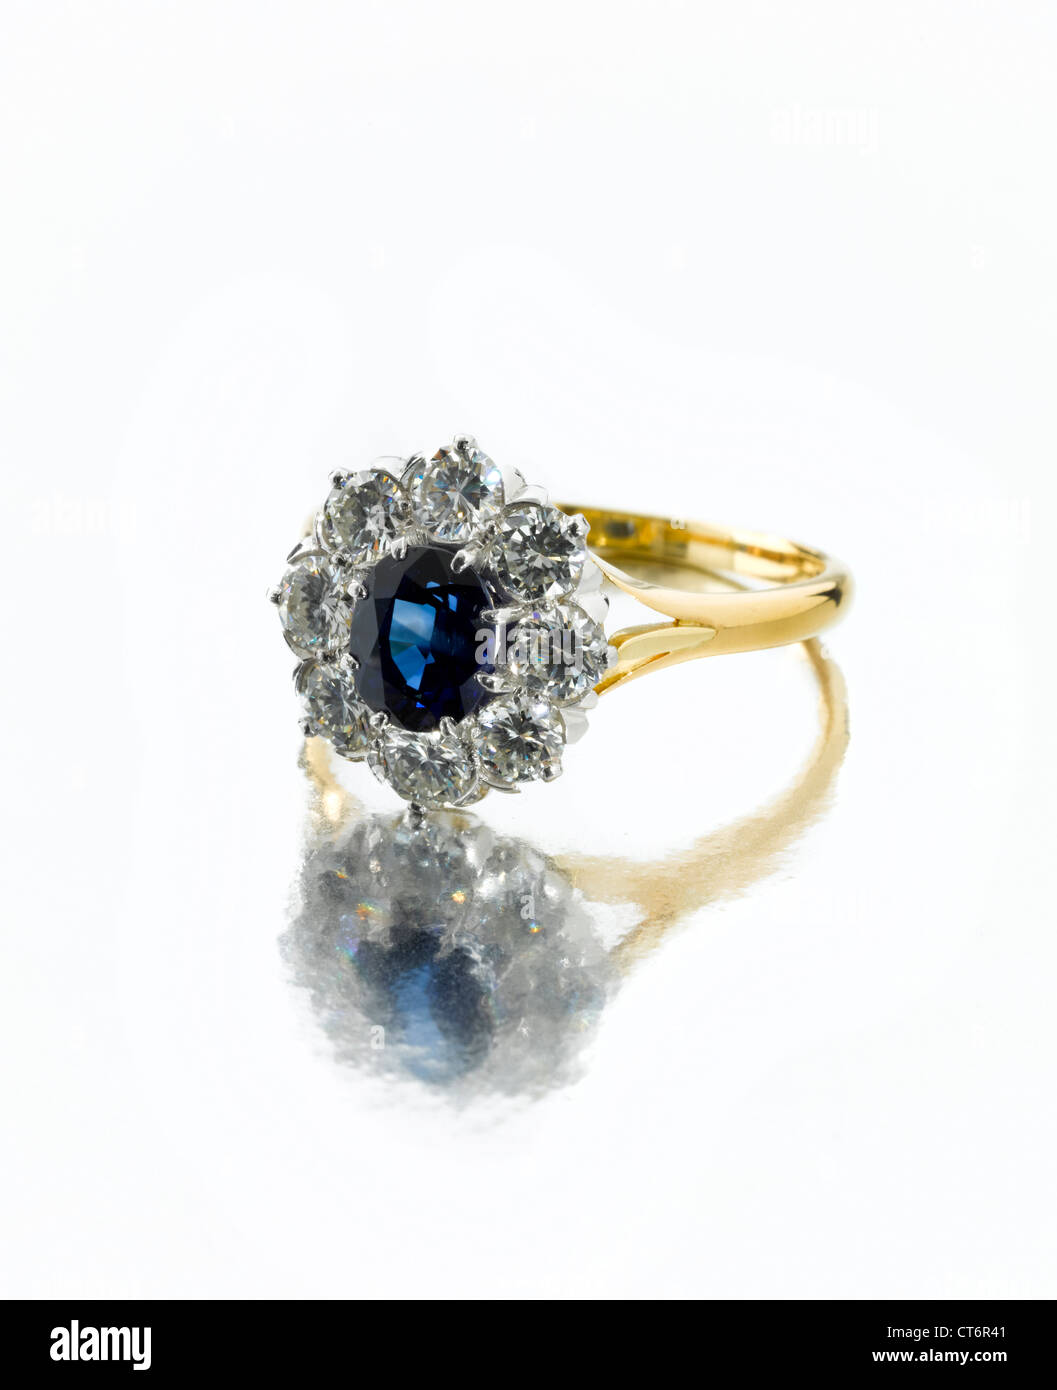 Antique Ceylon sapphire gold ring. Stock Photo